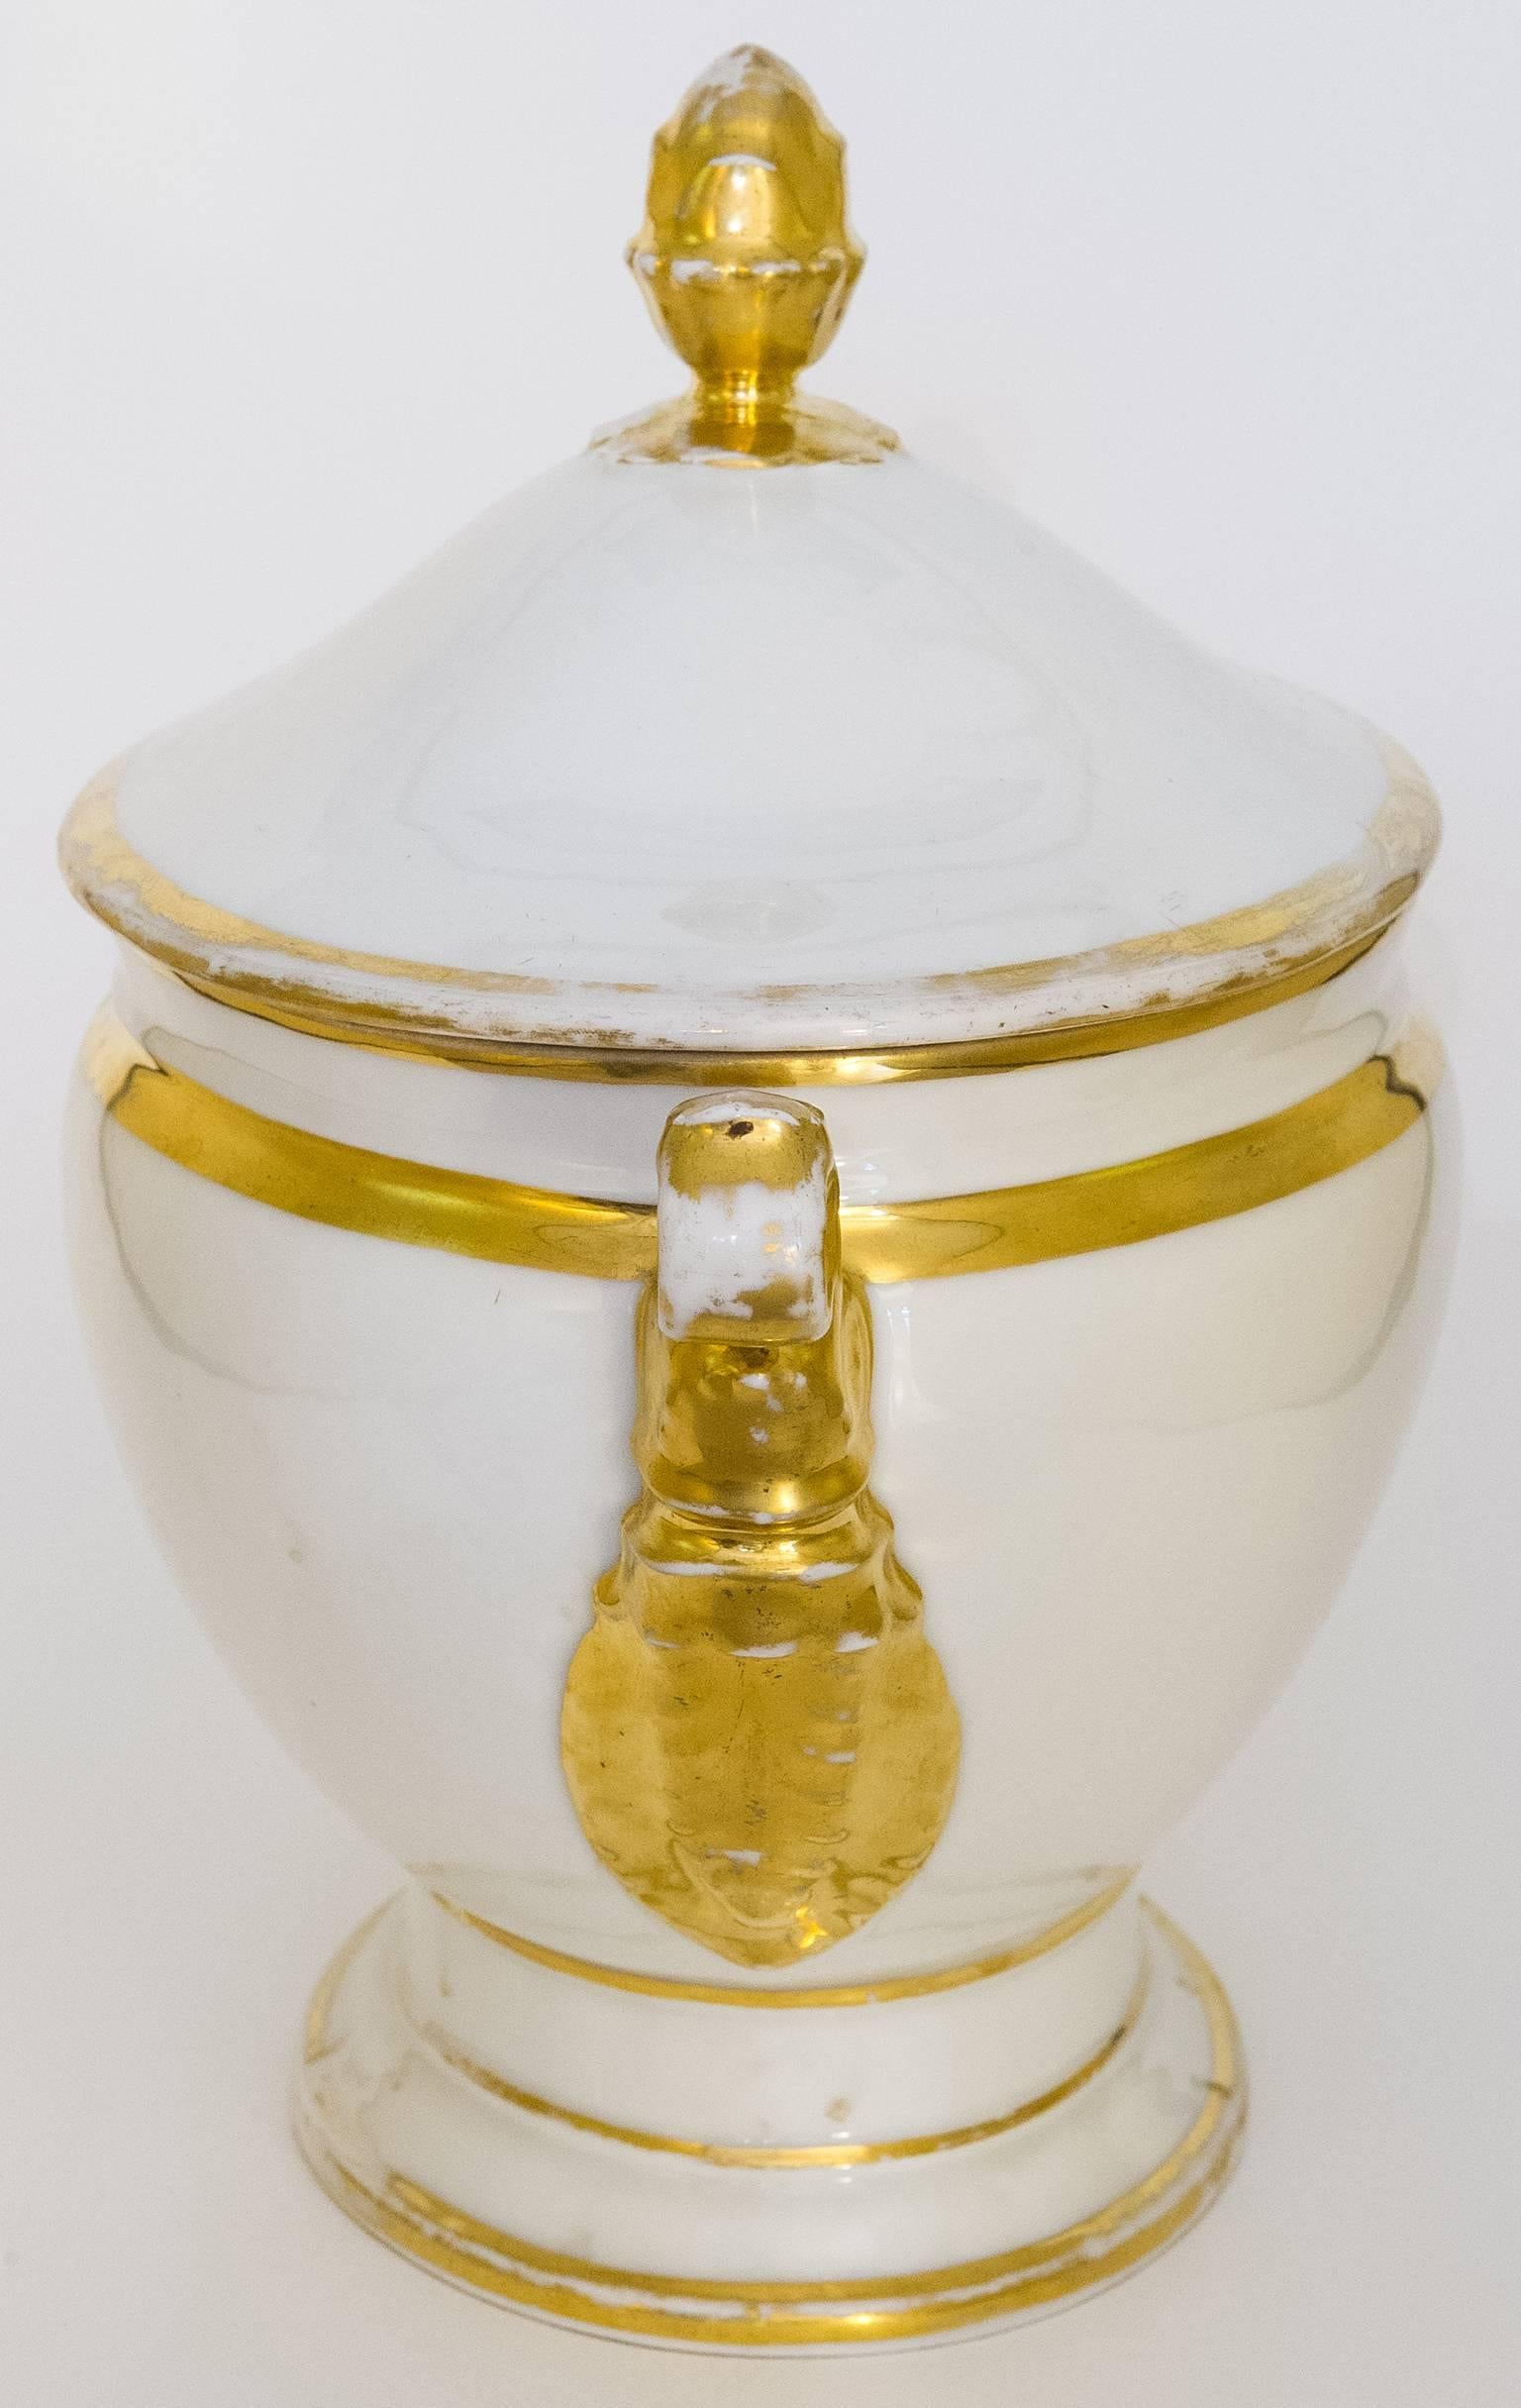 Antique elegant France Empire tureen, porcelain gilt: a perfect gift for Christmas time.
O/3720 -